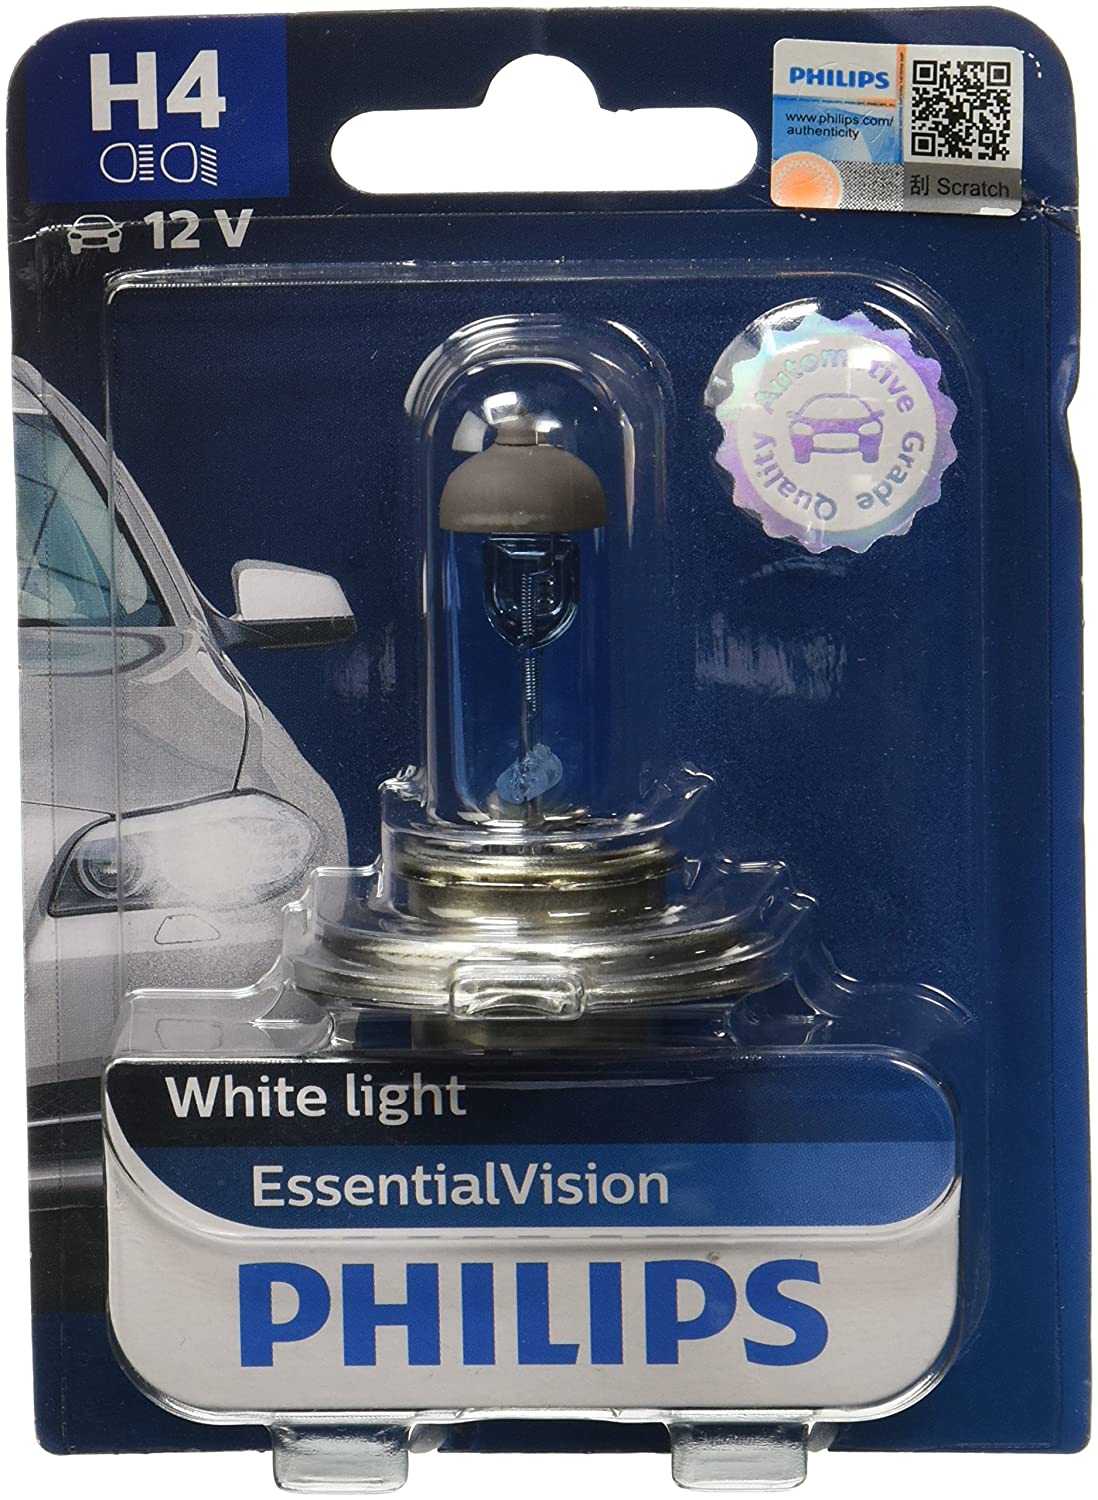 PHILIPS H4 12V Essentialvision Headlight White Light